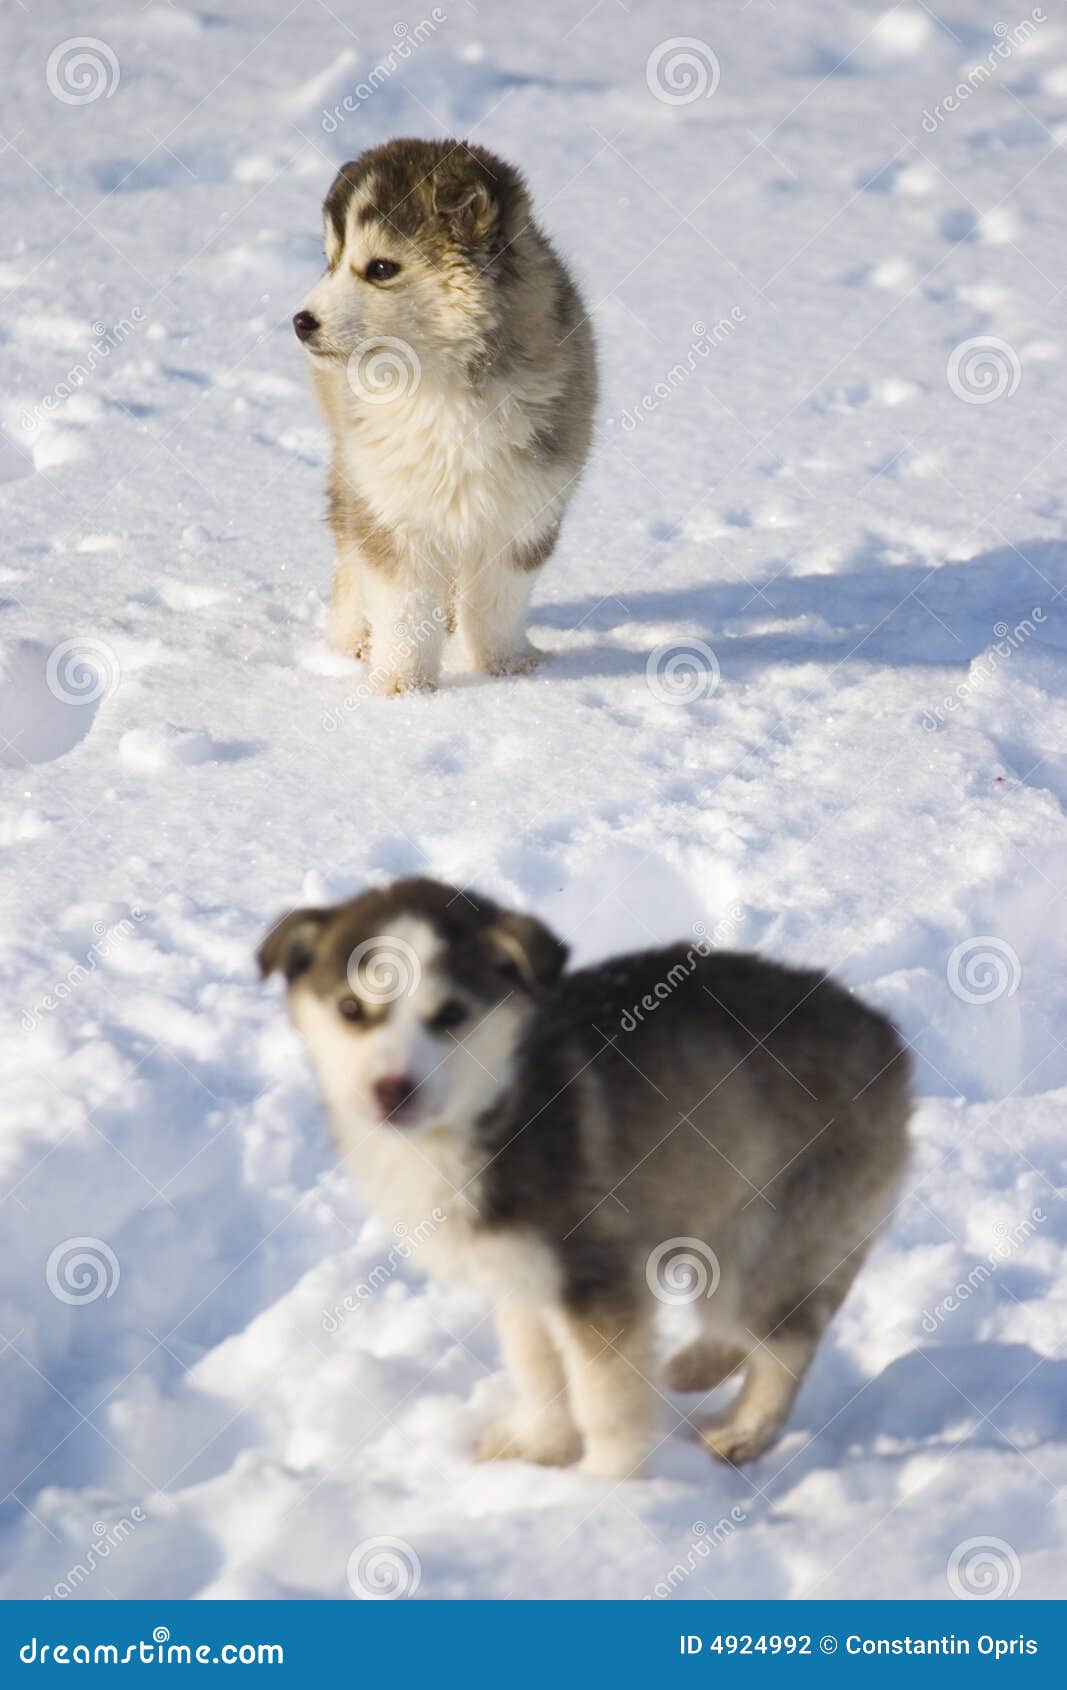 Puppies in snow stock photo. Image of stood, animals, humorous - 4924992